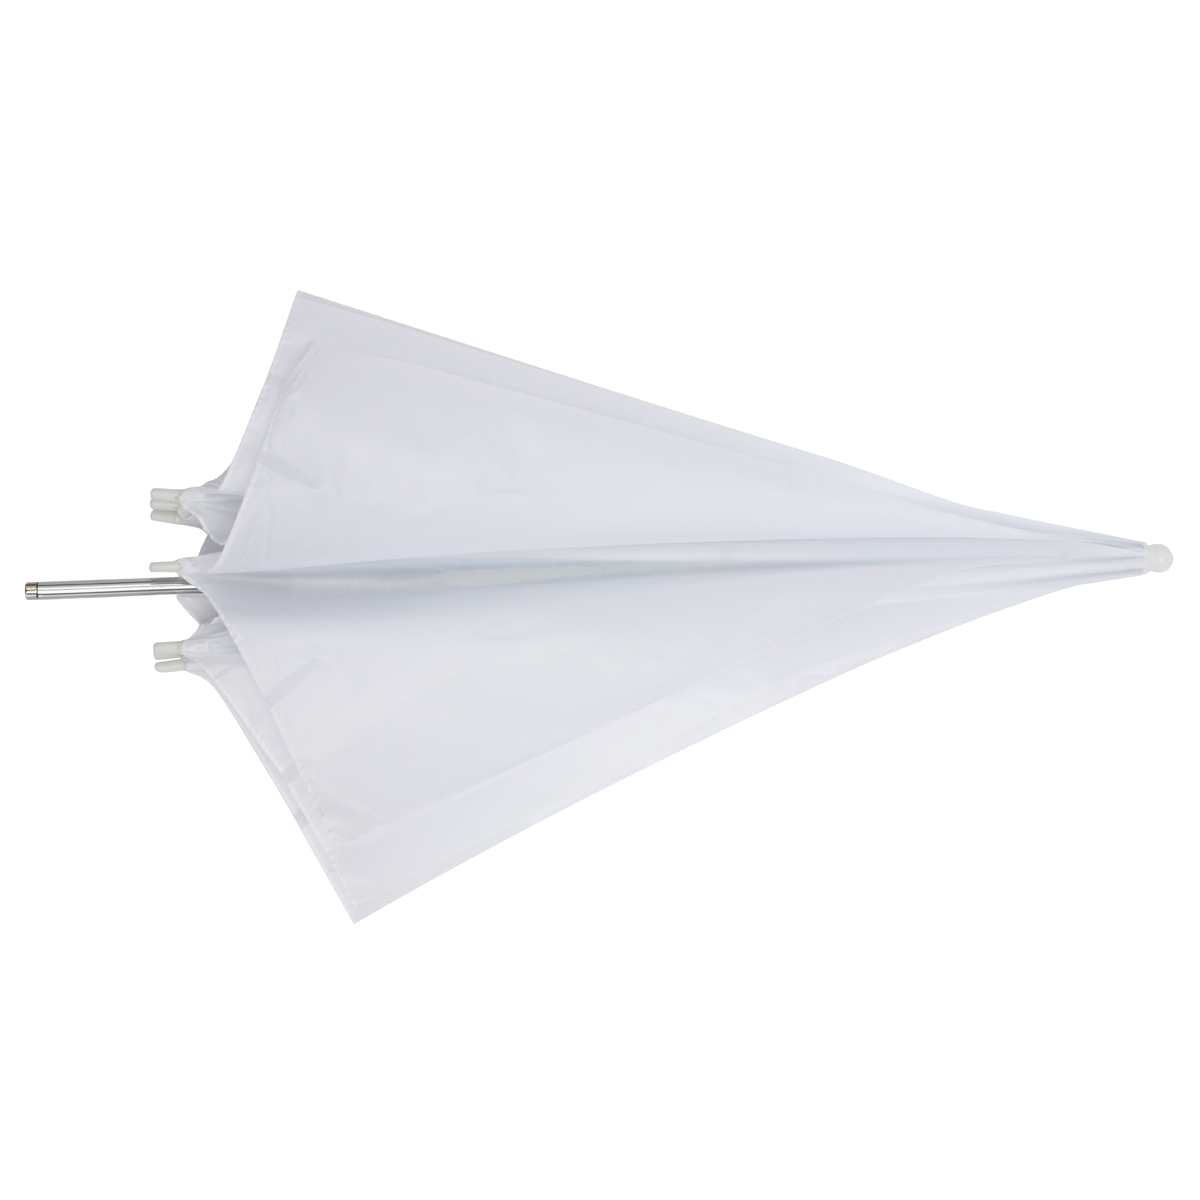 43 inch Photography Studio Video Photo Light Umbrella White Translucent Diffuser flash Soft Umbrella Accessories